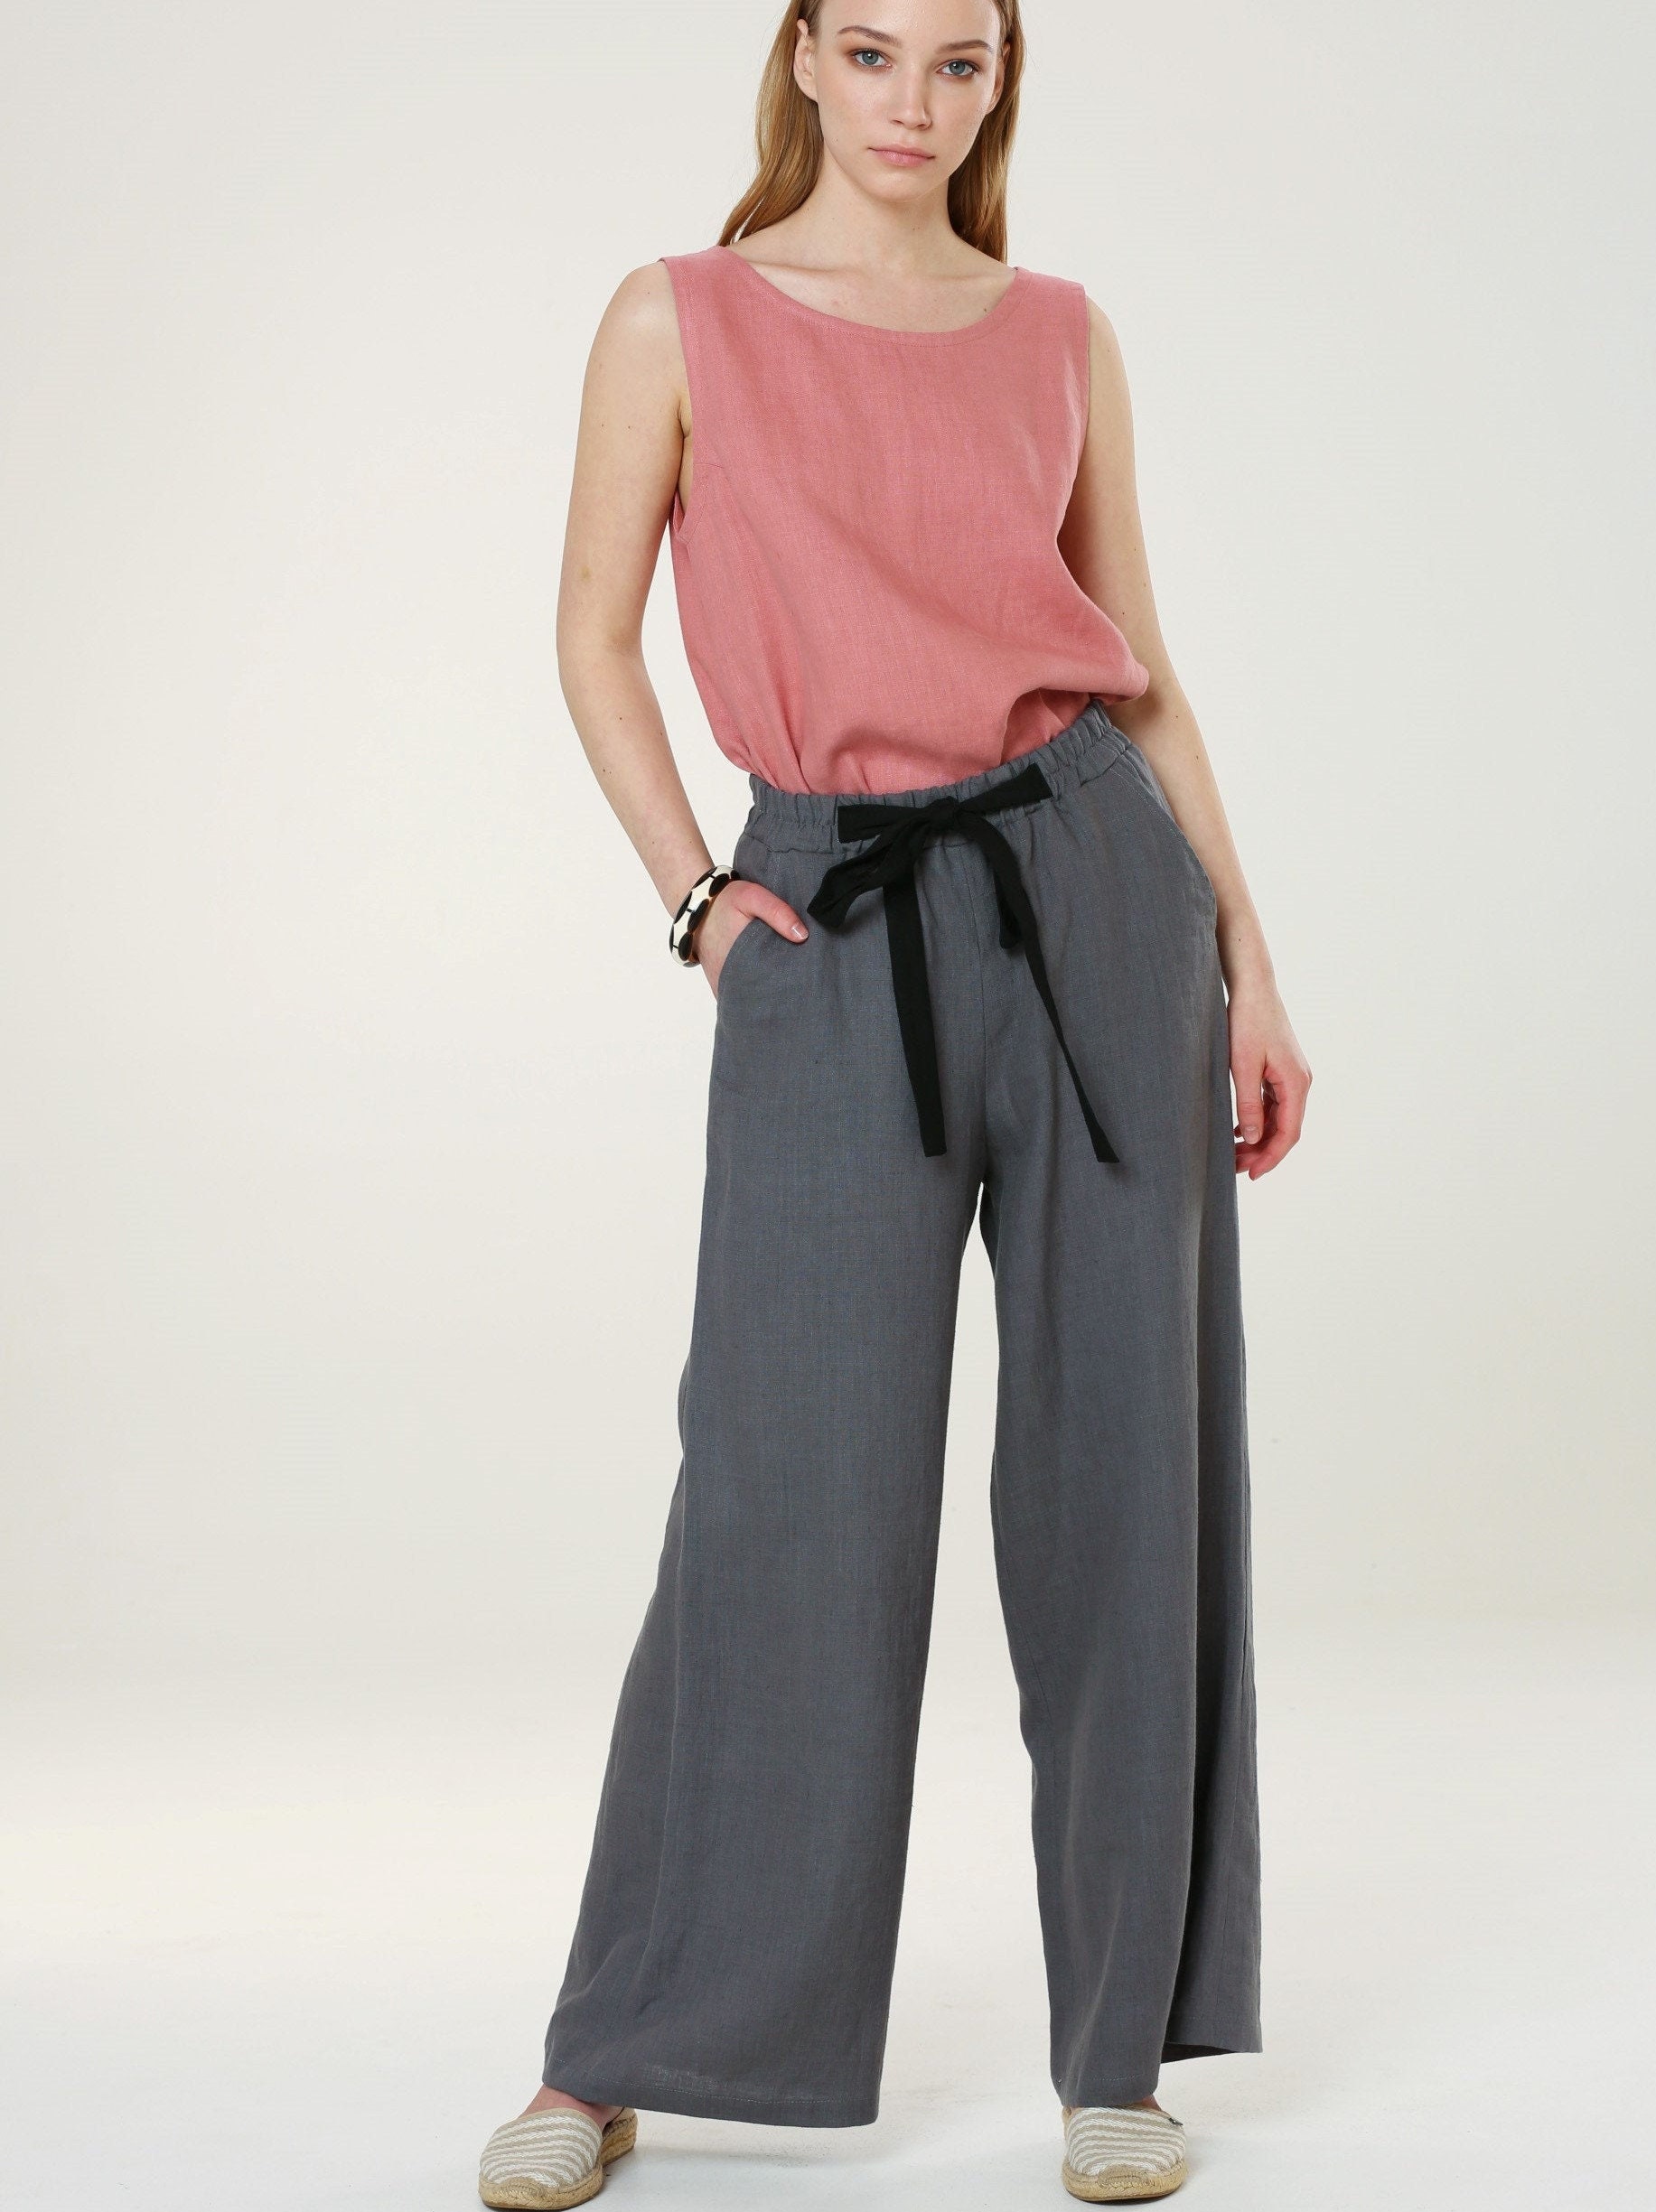 Pantalon Sarouel Femme RELAX  Cotton linen pants, Cropped pants, Printed  trousers